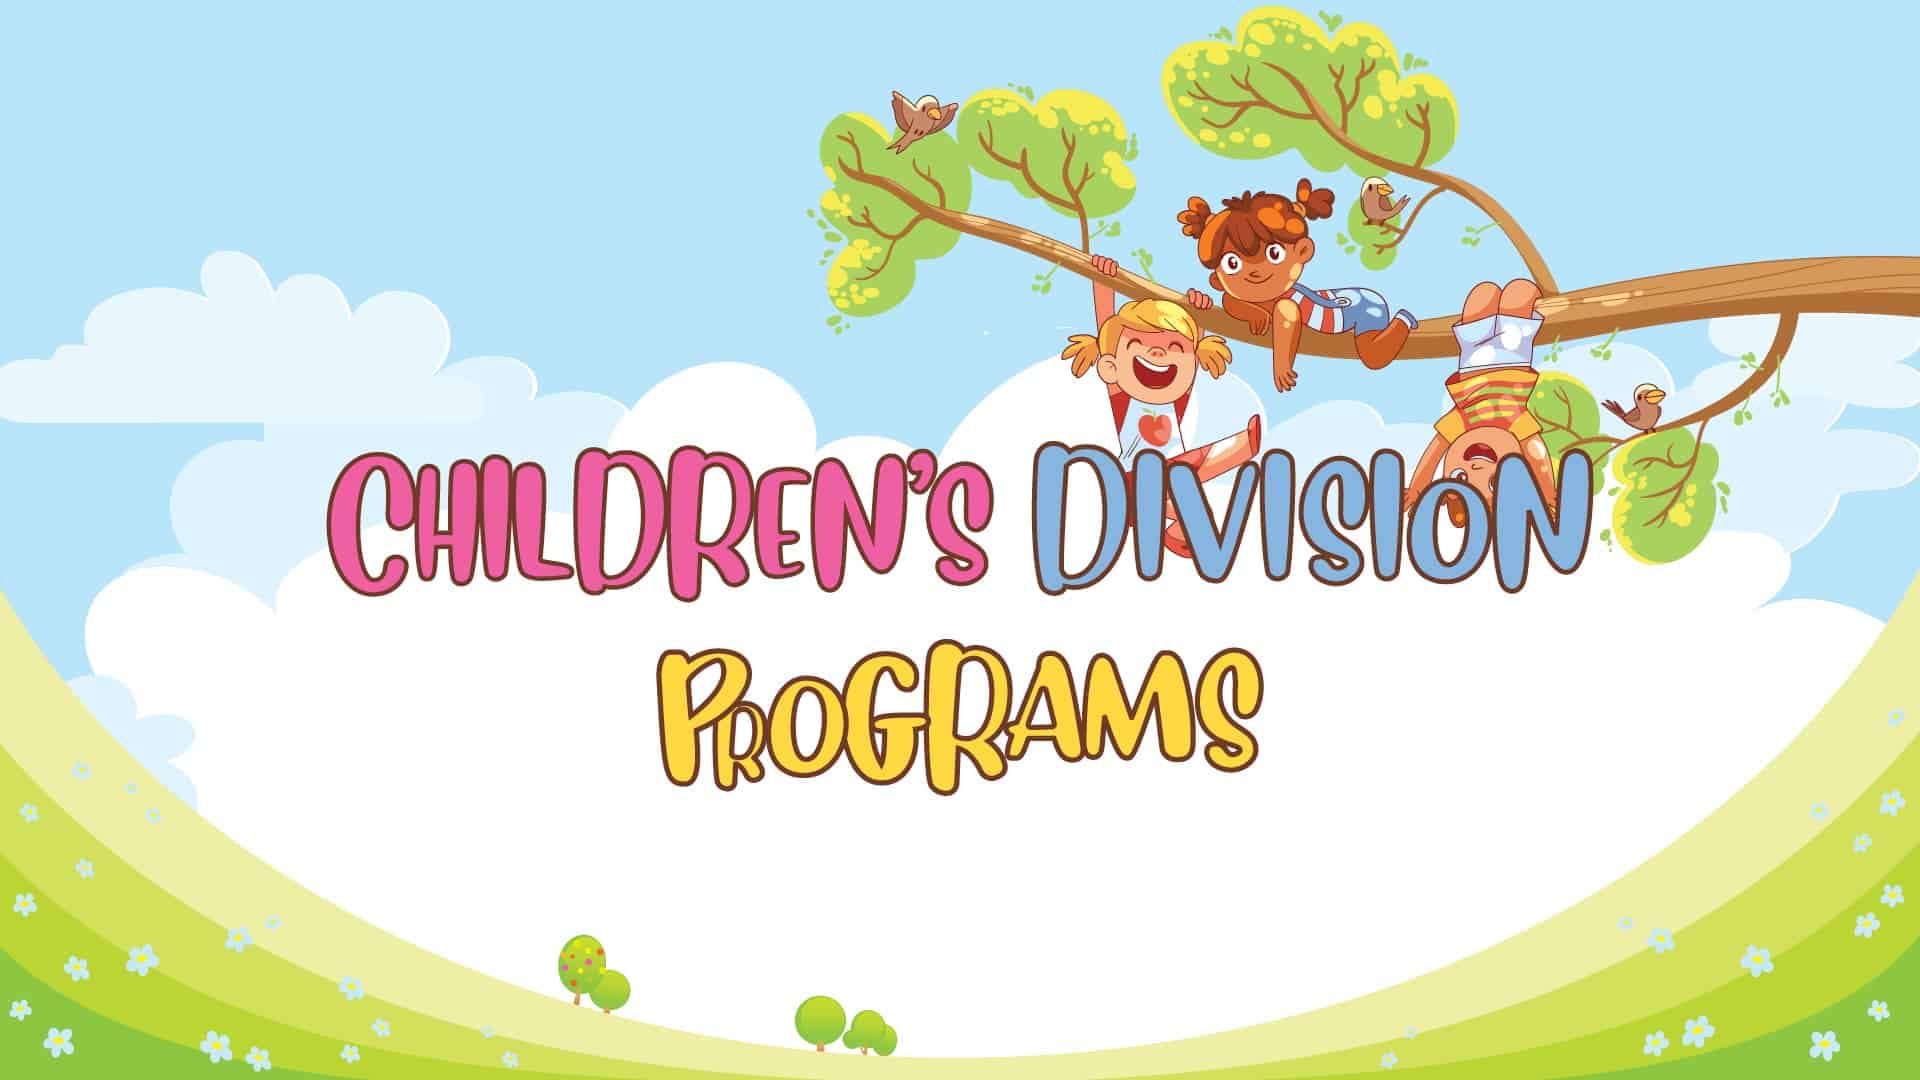 Children's Division Programs